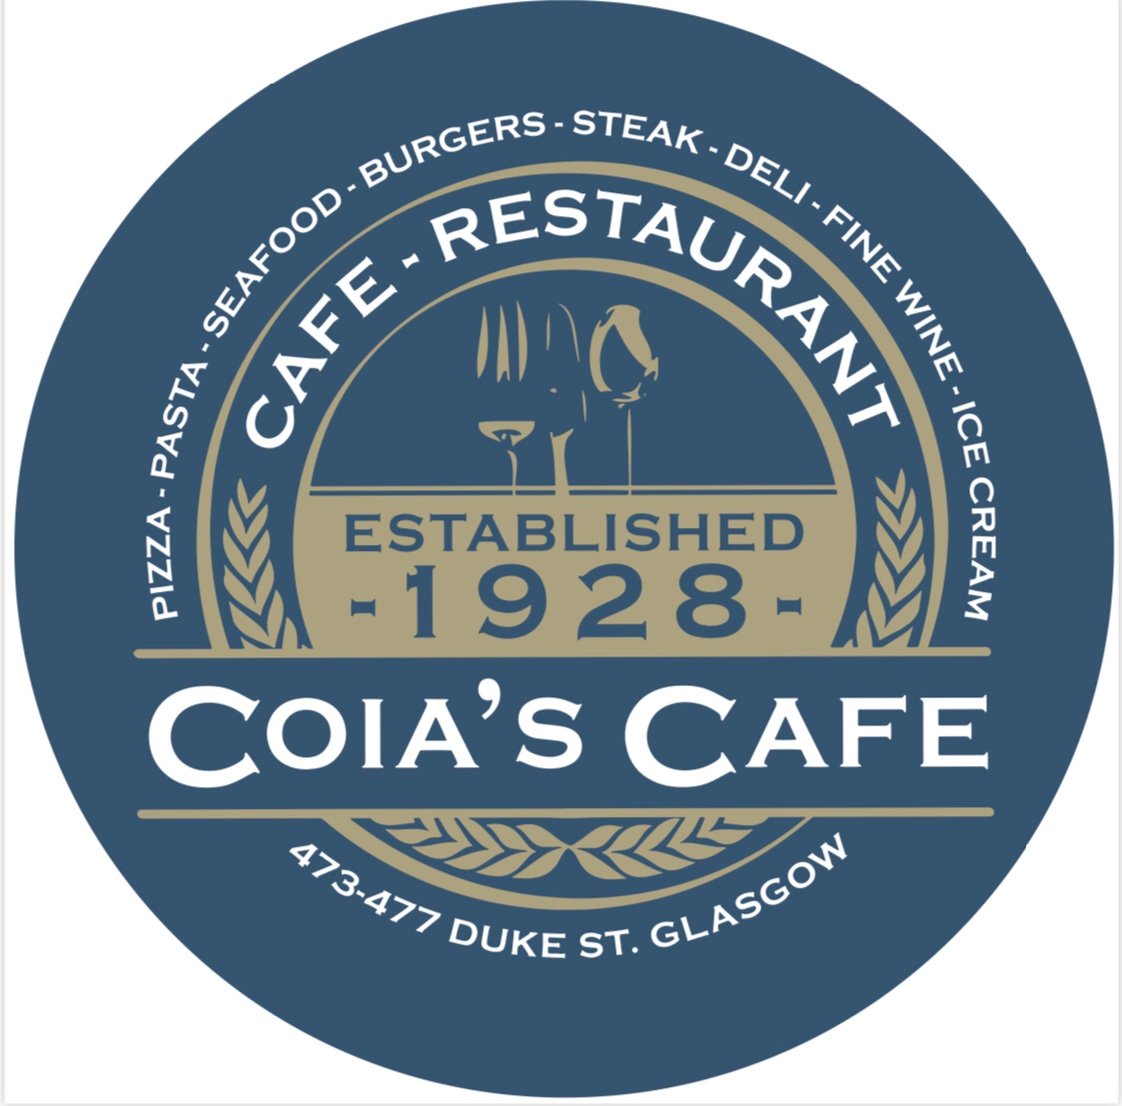 🇮🇹 Cafe | Restaurant | Deli
🍳 Breakfast 🥗 Lunch 🥘 Dinner
🍕 Pizza🍝 Pasta 🦐 Seafood 
🍷 Fine Wine. 
Serving Glasgow since 1928
📸 Insta @coiasglasgow